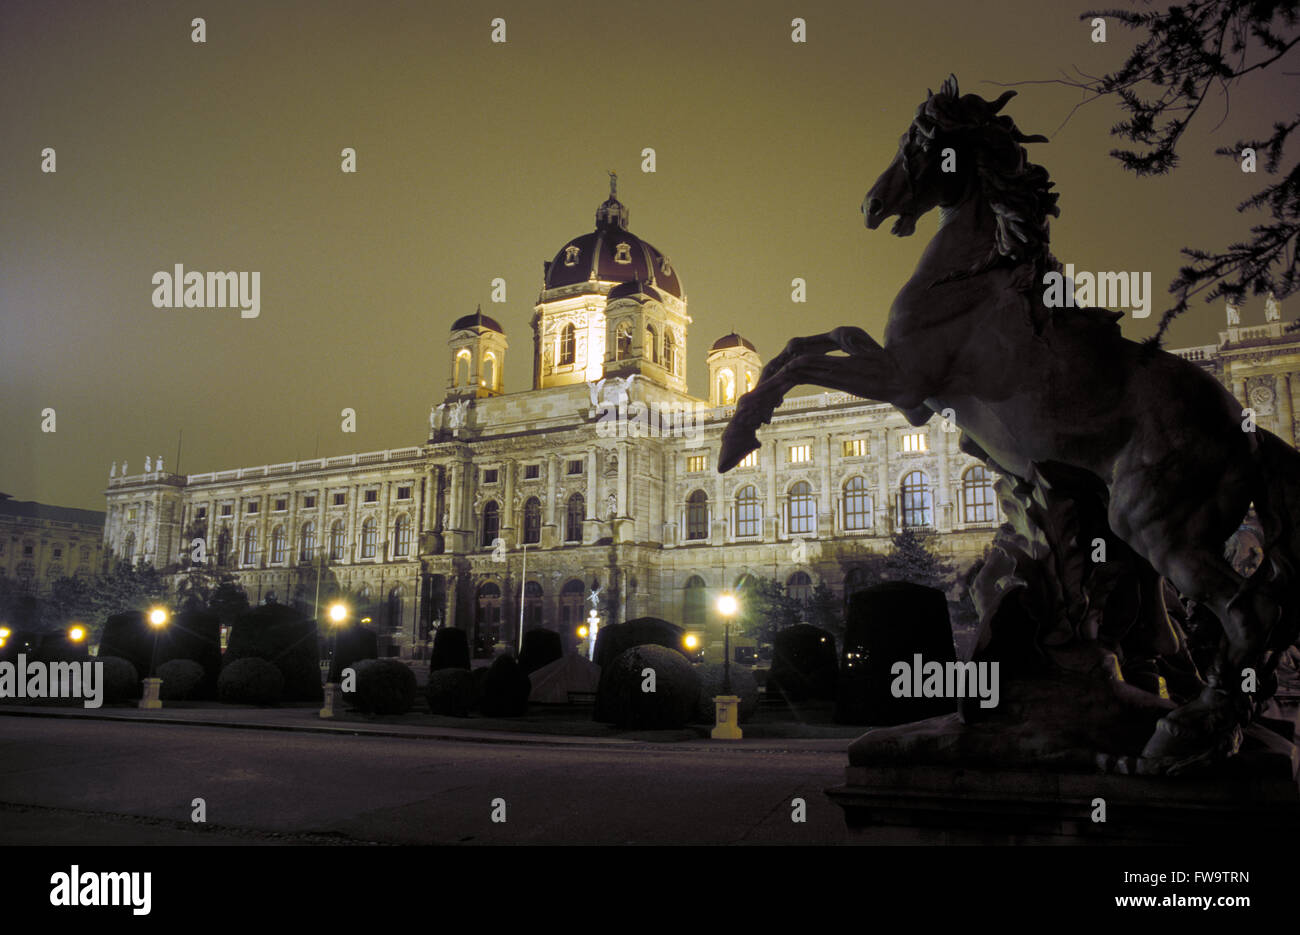 AUT, Austria, Vienna, statua equestre di fronte al Museo Art-History. AUT, Oesterreich, Wien, Pferdeskulptur vor dem Kunsthist Foto Stock